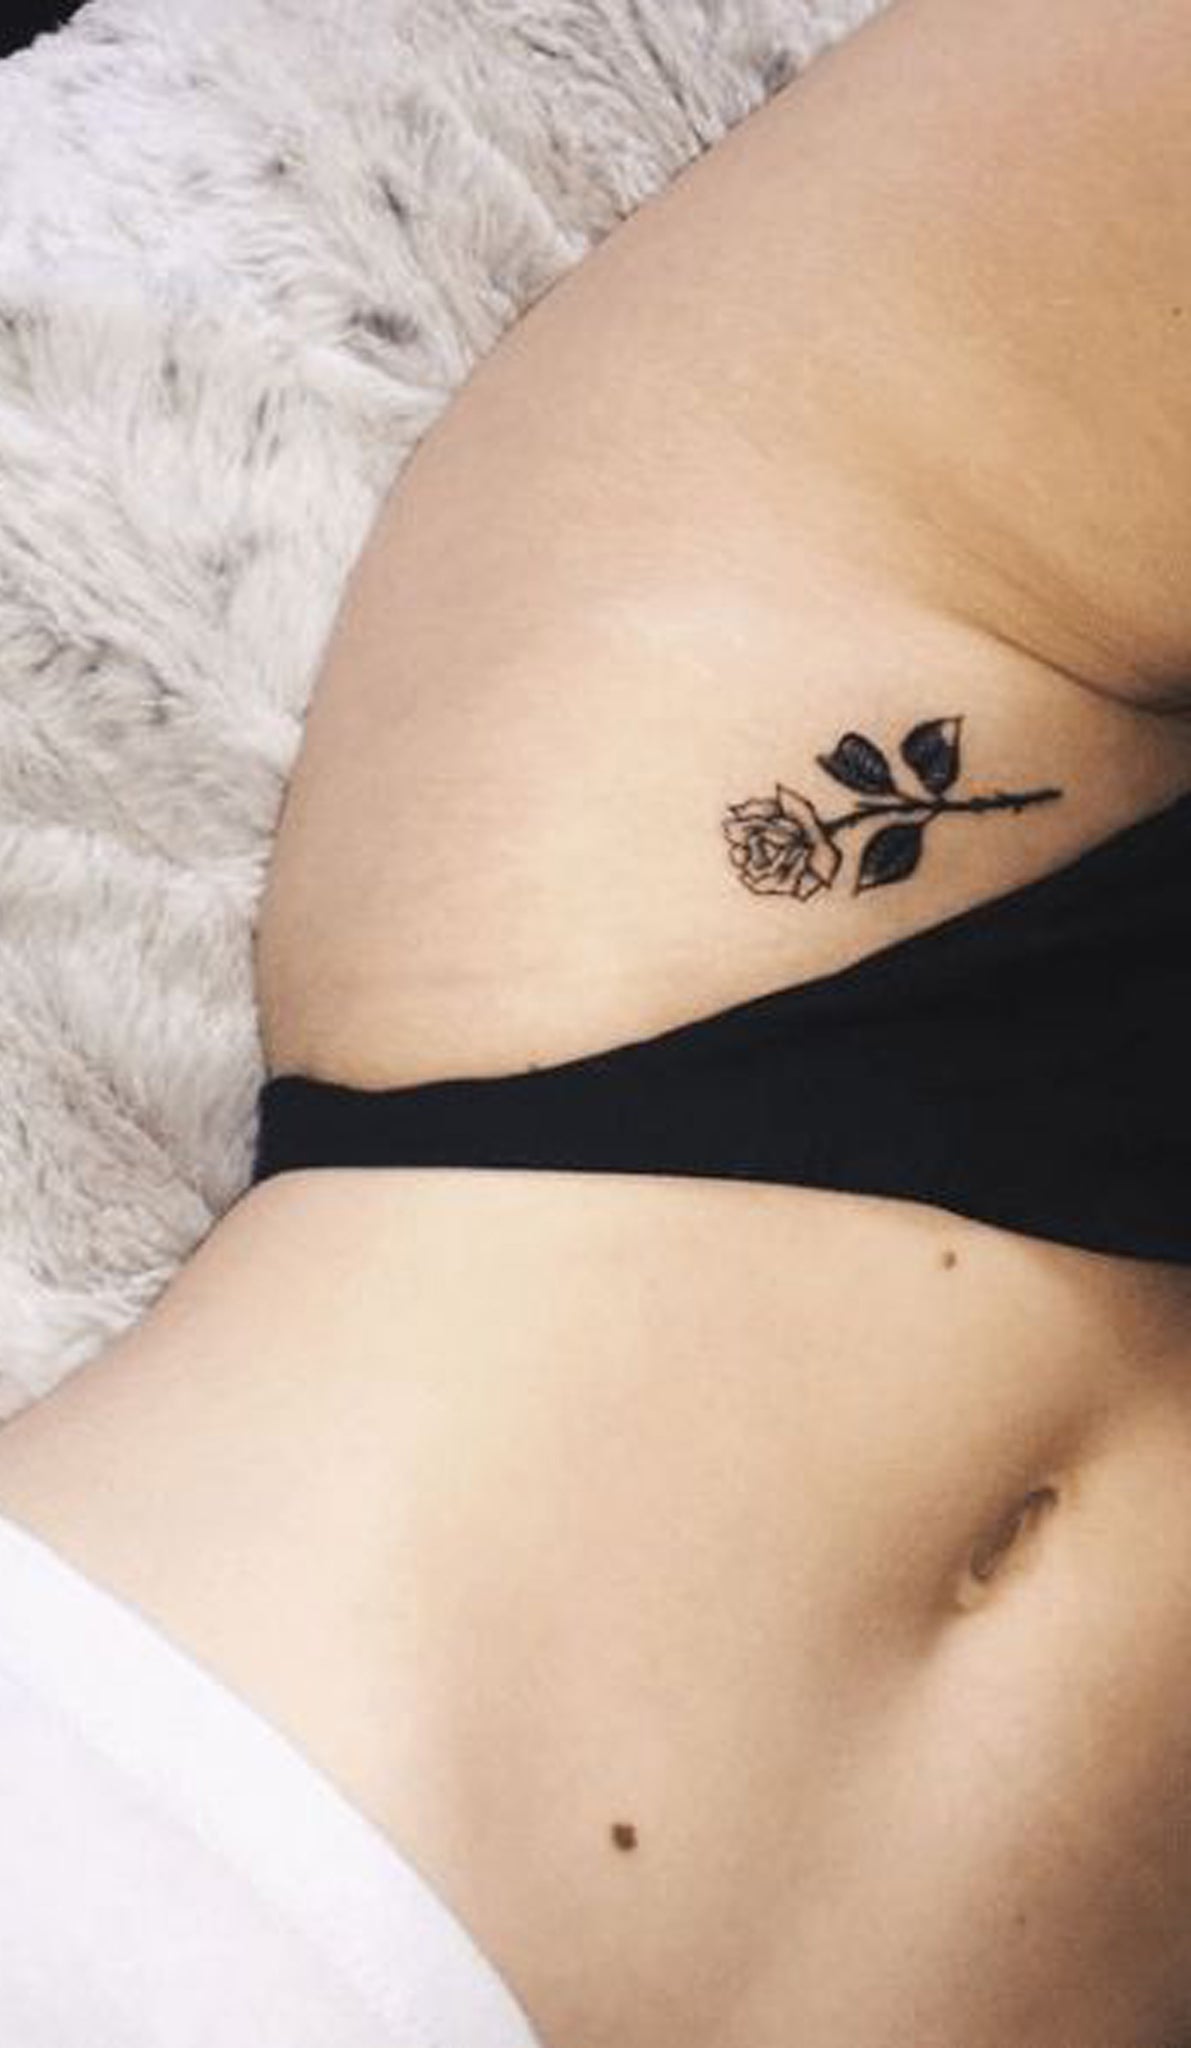 Tiny Small Rose Hip Tattoo Ideas for Women - Black Flower Outline Side Tat - www.MyBodiArt.com #tattoos